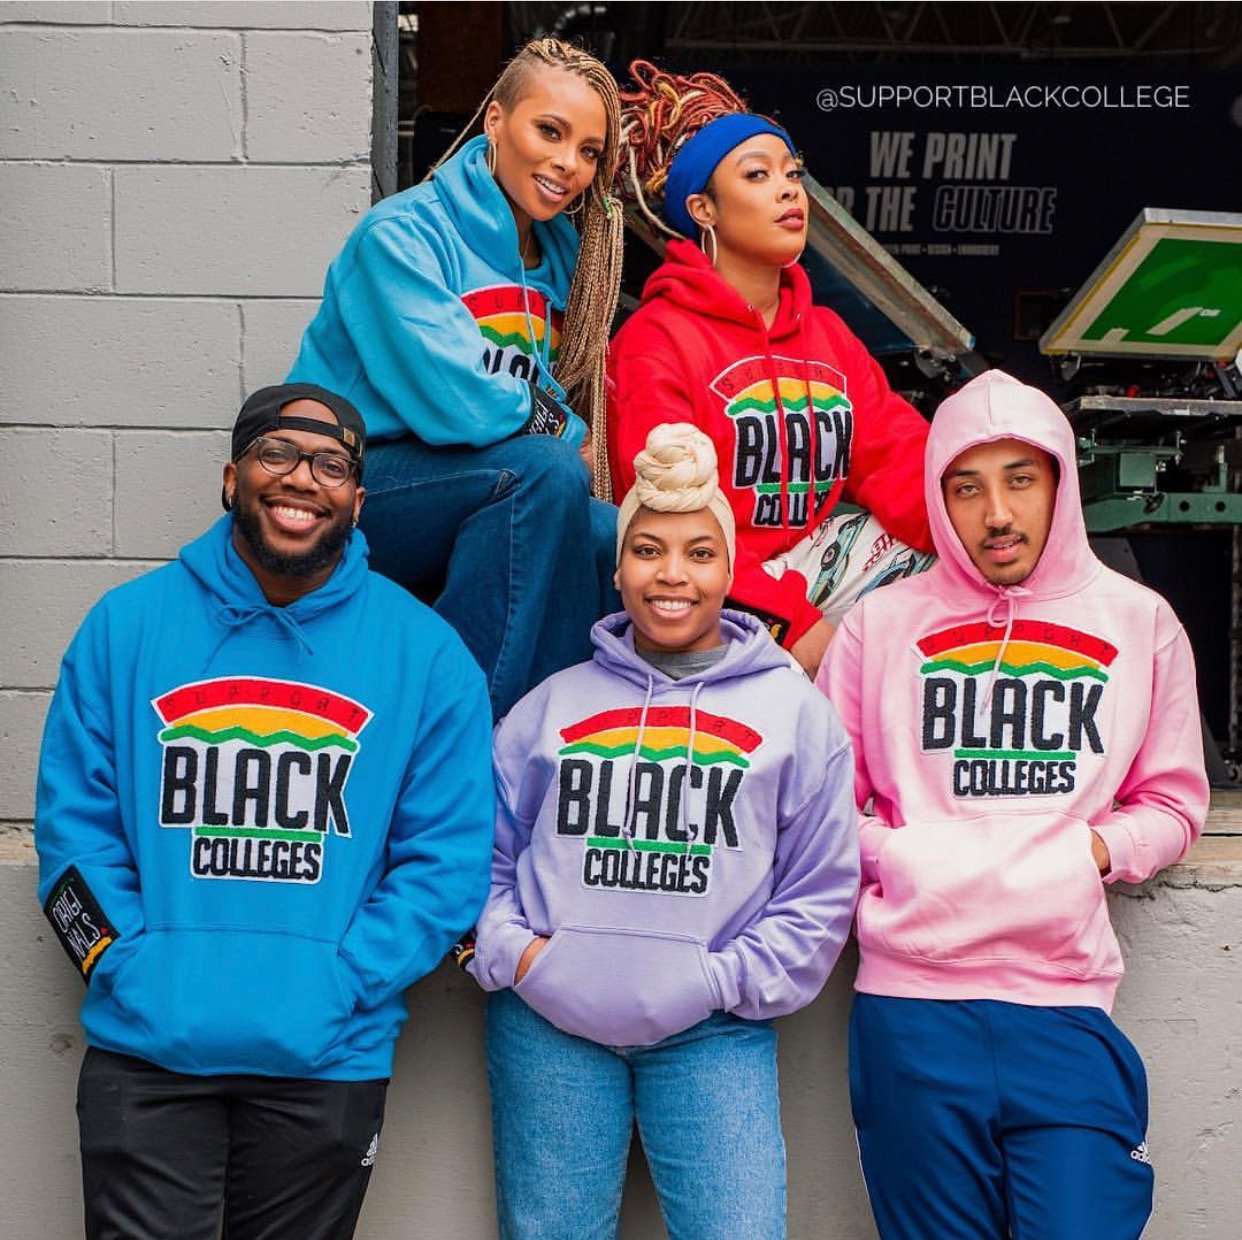 Models in support black college hoodies